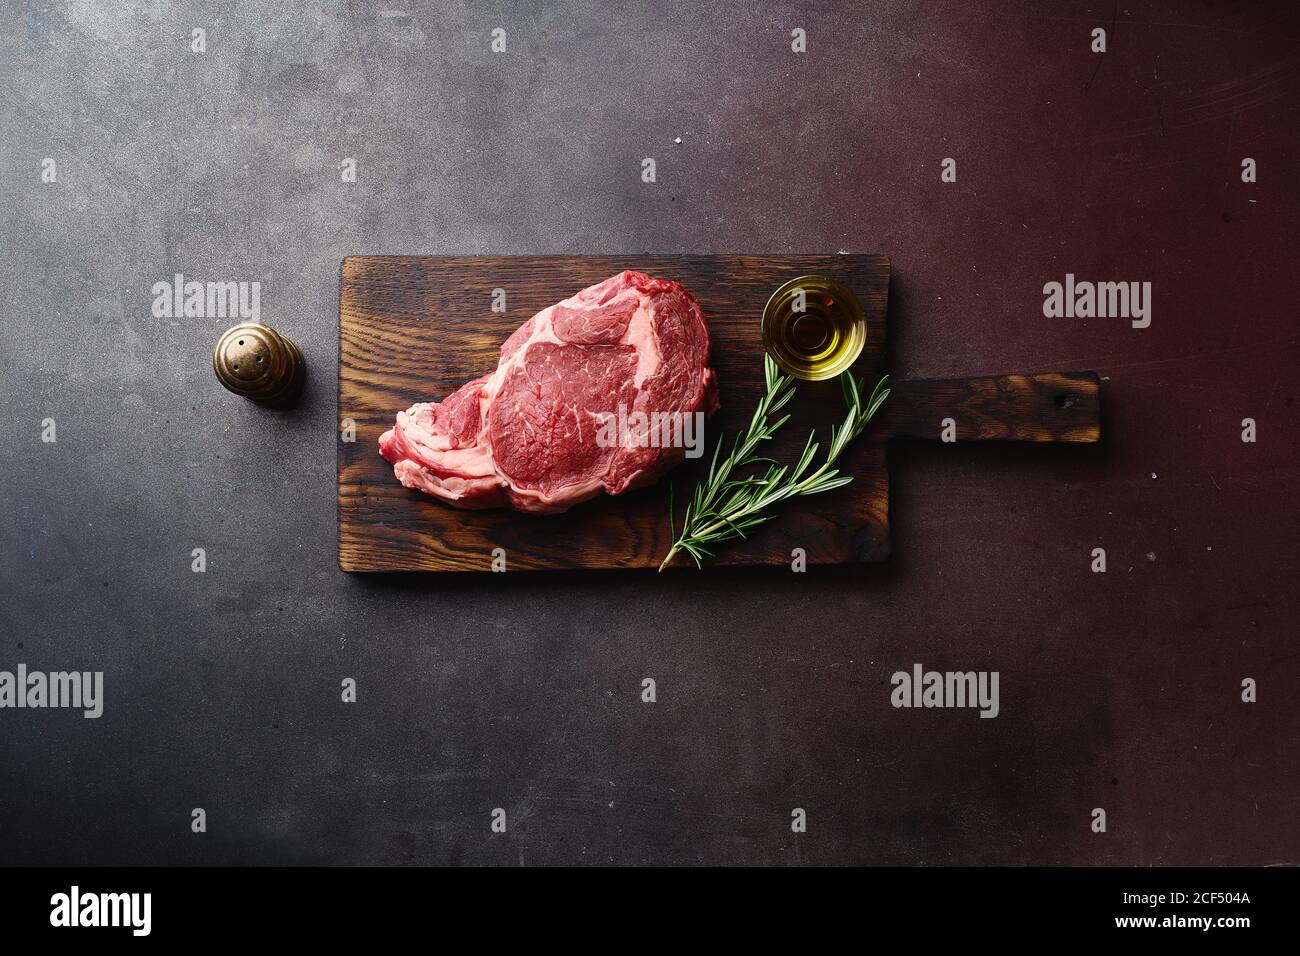 https://c8.alamy.com/comp/2CF504A/top-view-of-raw-black-angus-prime-rib-eye-beef-steak-on-wooden-cutting-board-2CF504A.jpg